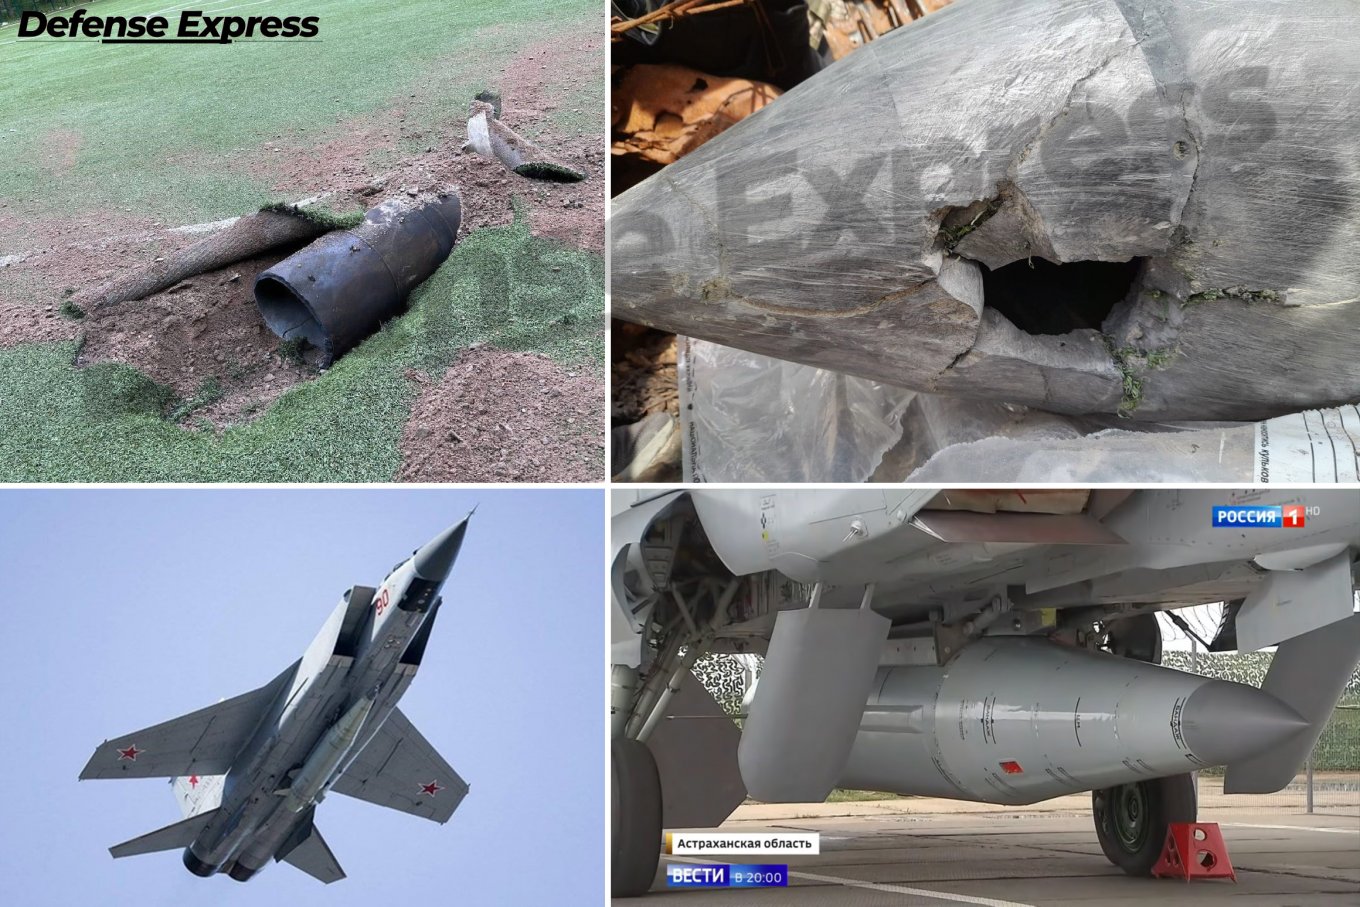 Russians Claim to Have Shot Down the Hrim-2 Ukrainian Missile, Defense Express, war in Ukraine, Russian-Ukrainian war